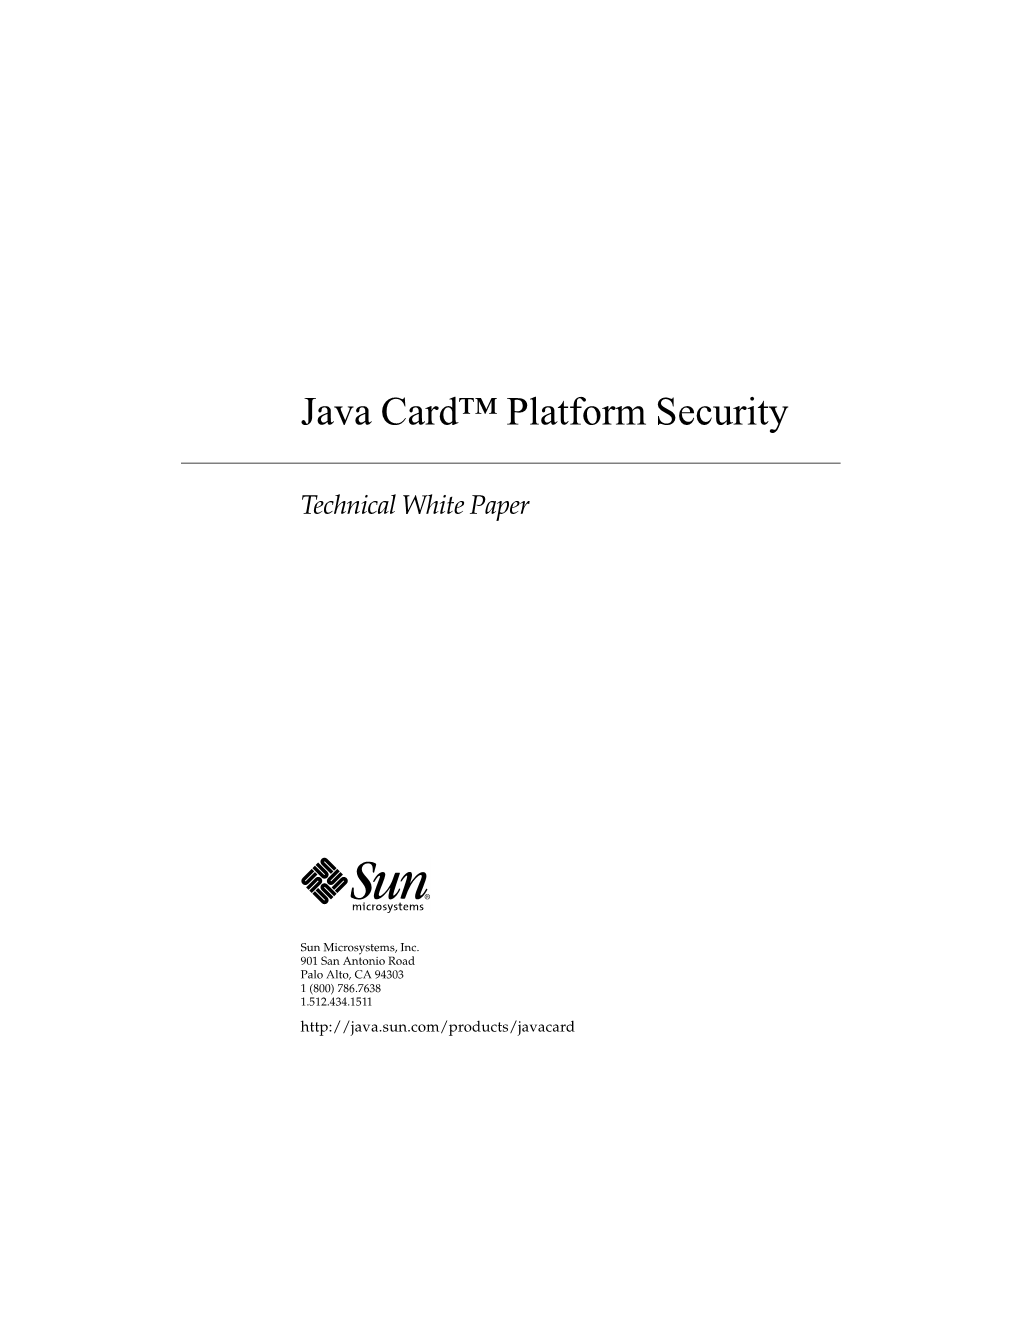 Java Card Platform Security Enhancements